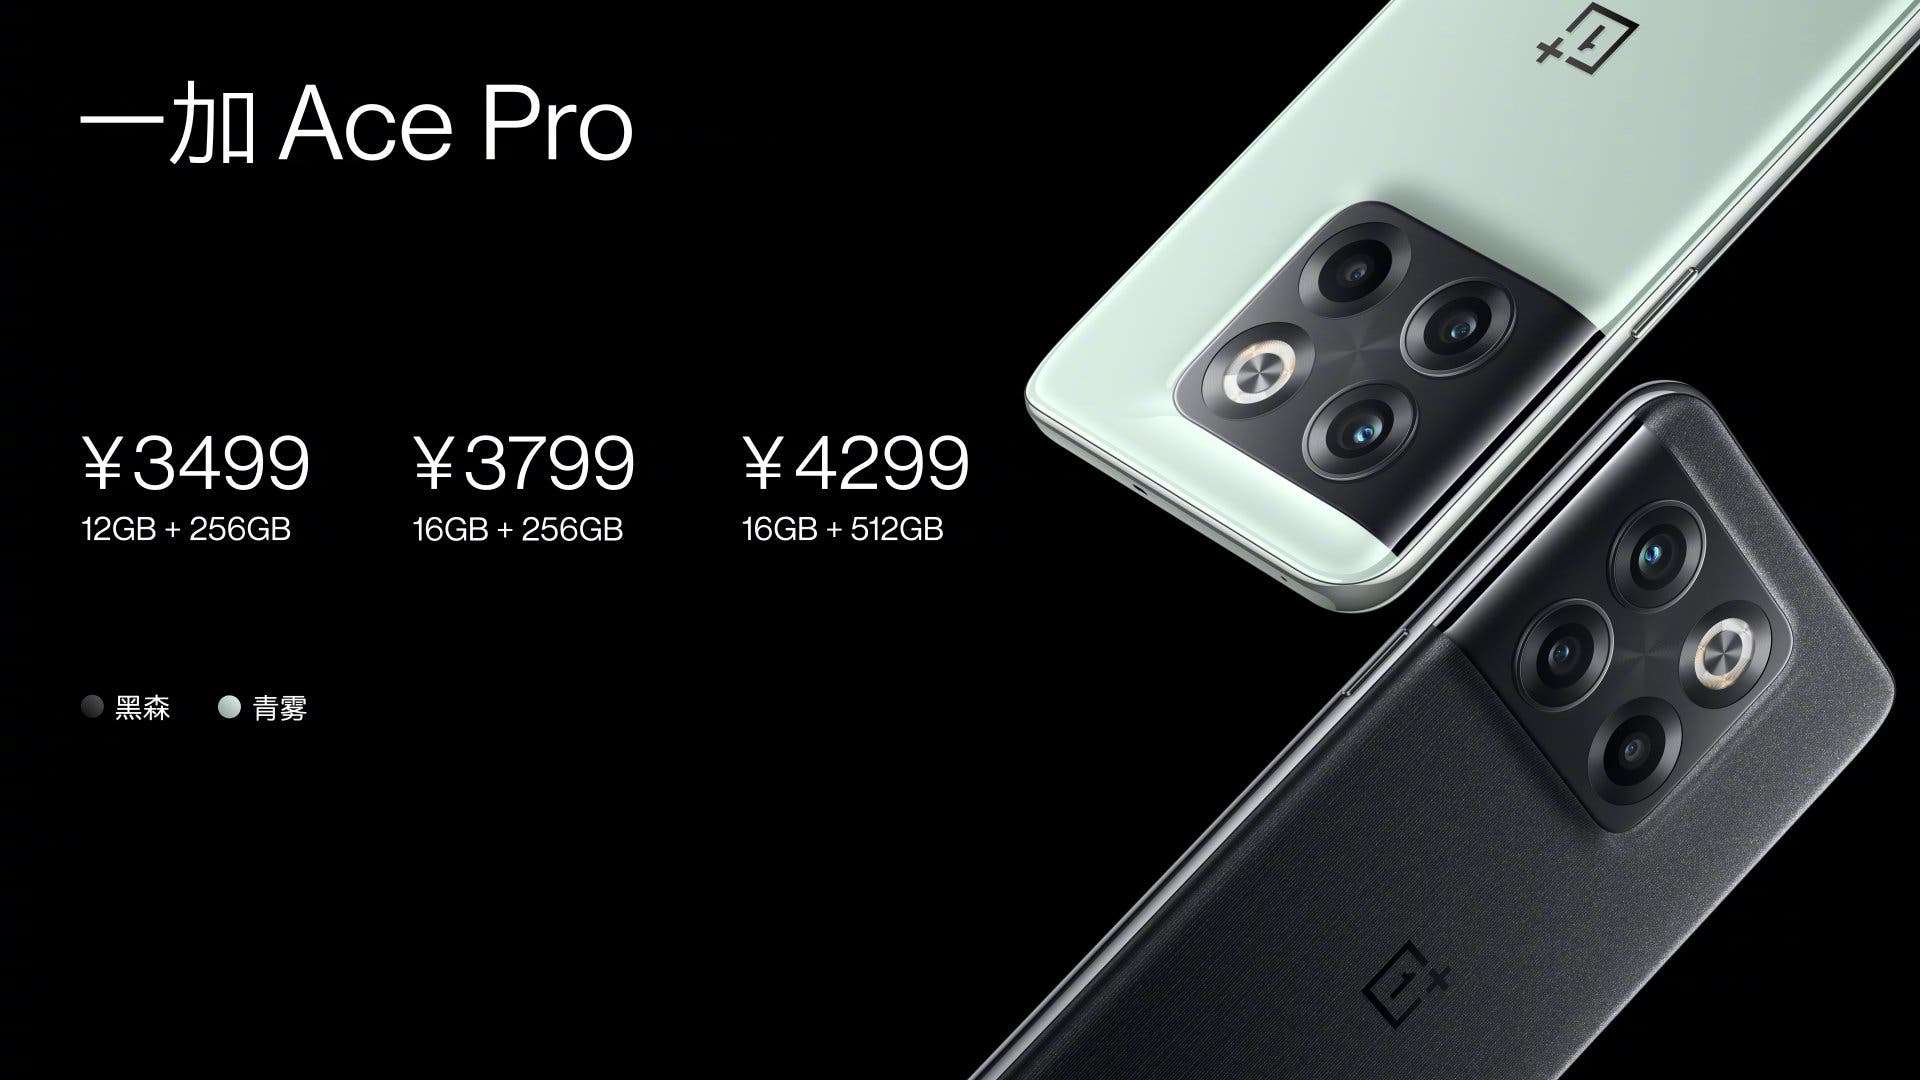 OnePlus Ace Pro prices